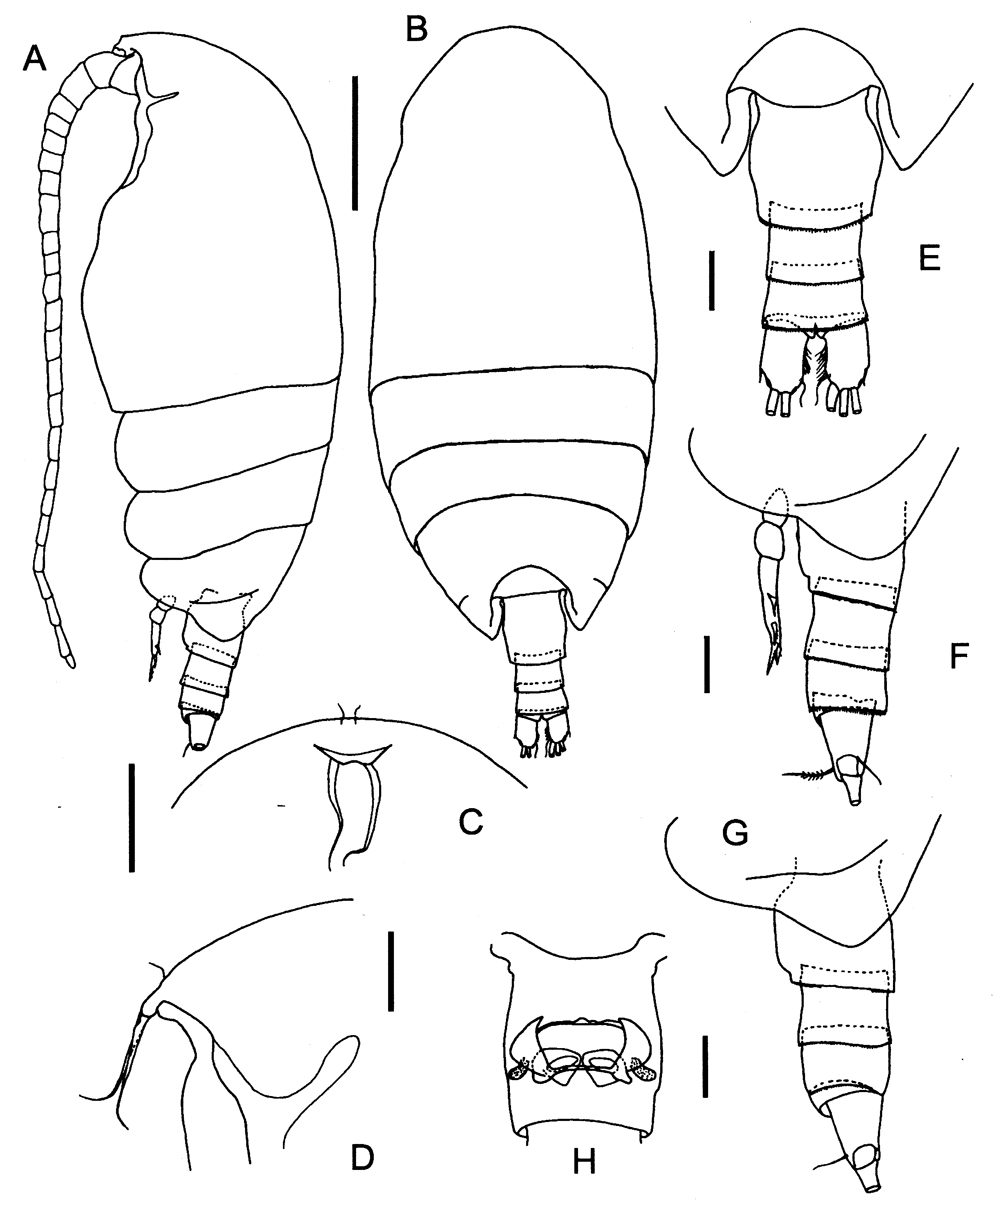 Species Procenognatha semisensata - Plate 1 of morphological figures